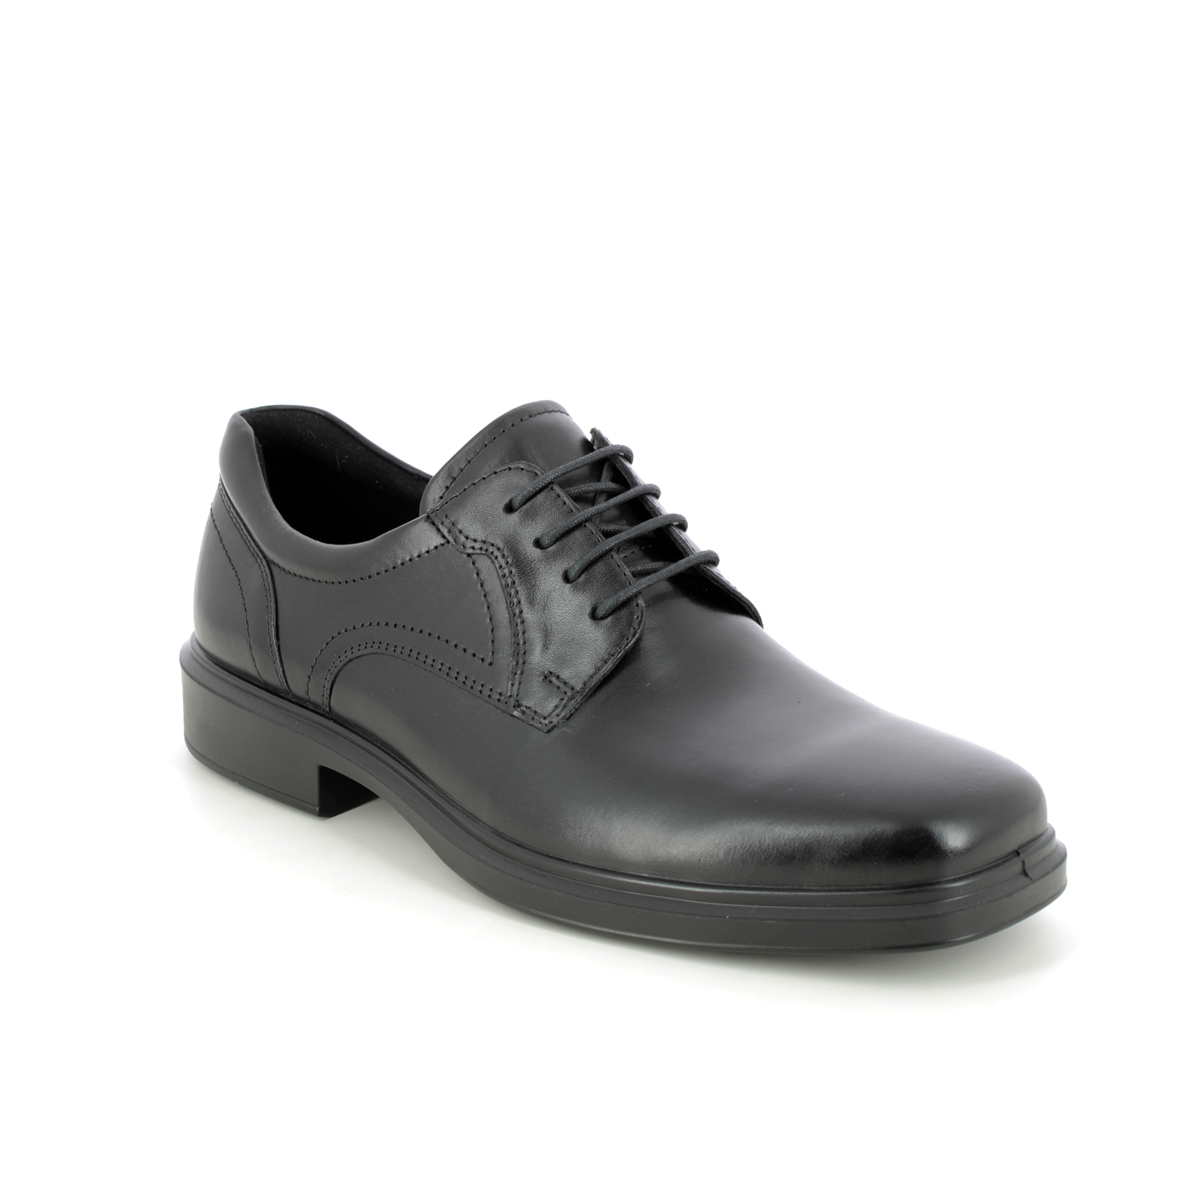 Ecco Helsinki 2 Plain Black Leather Mens Formal Shoes 500164-01001 In Size 42 In Plain Black Leather